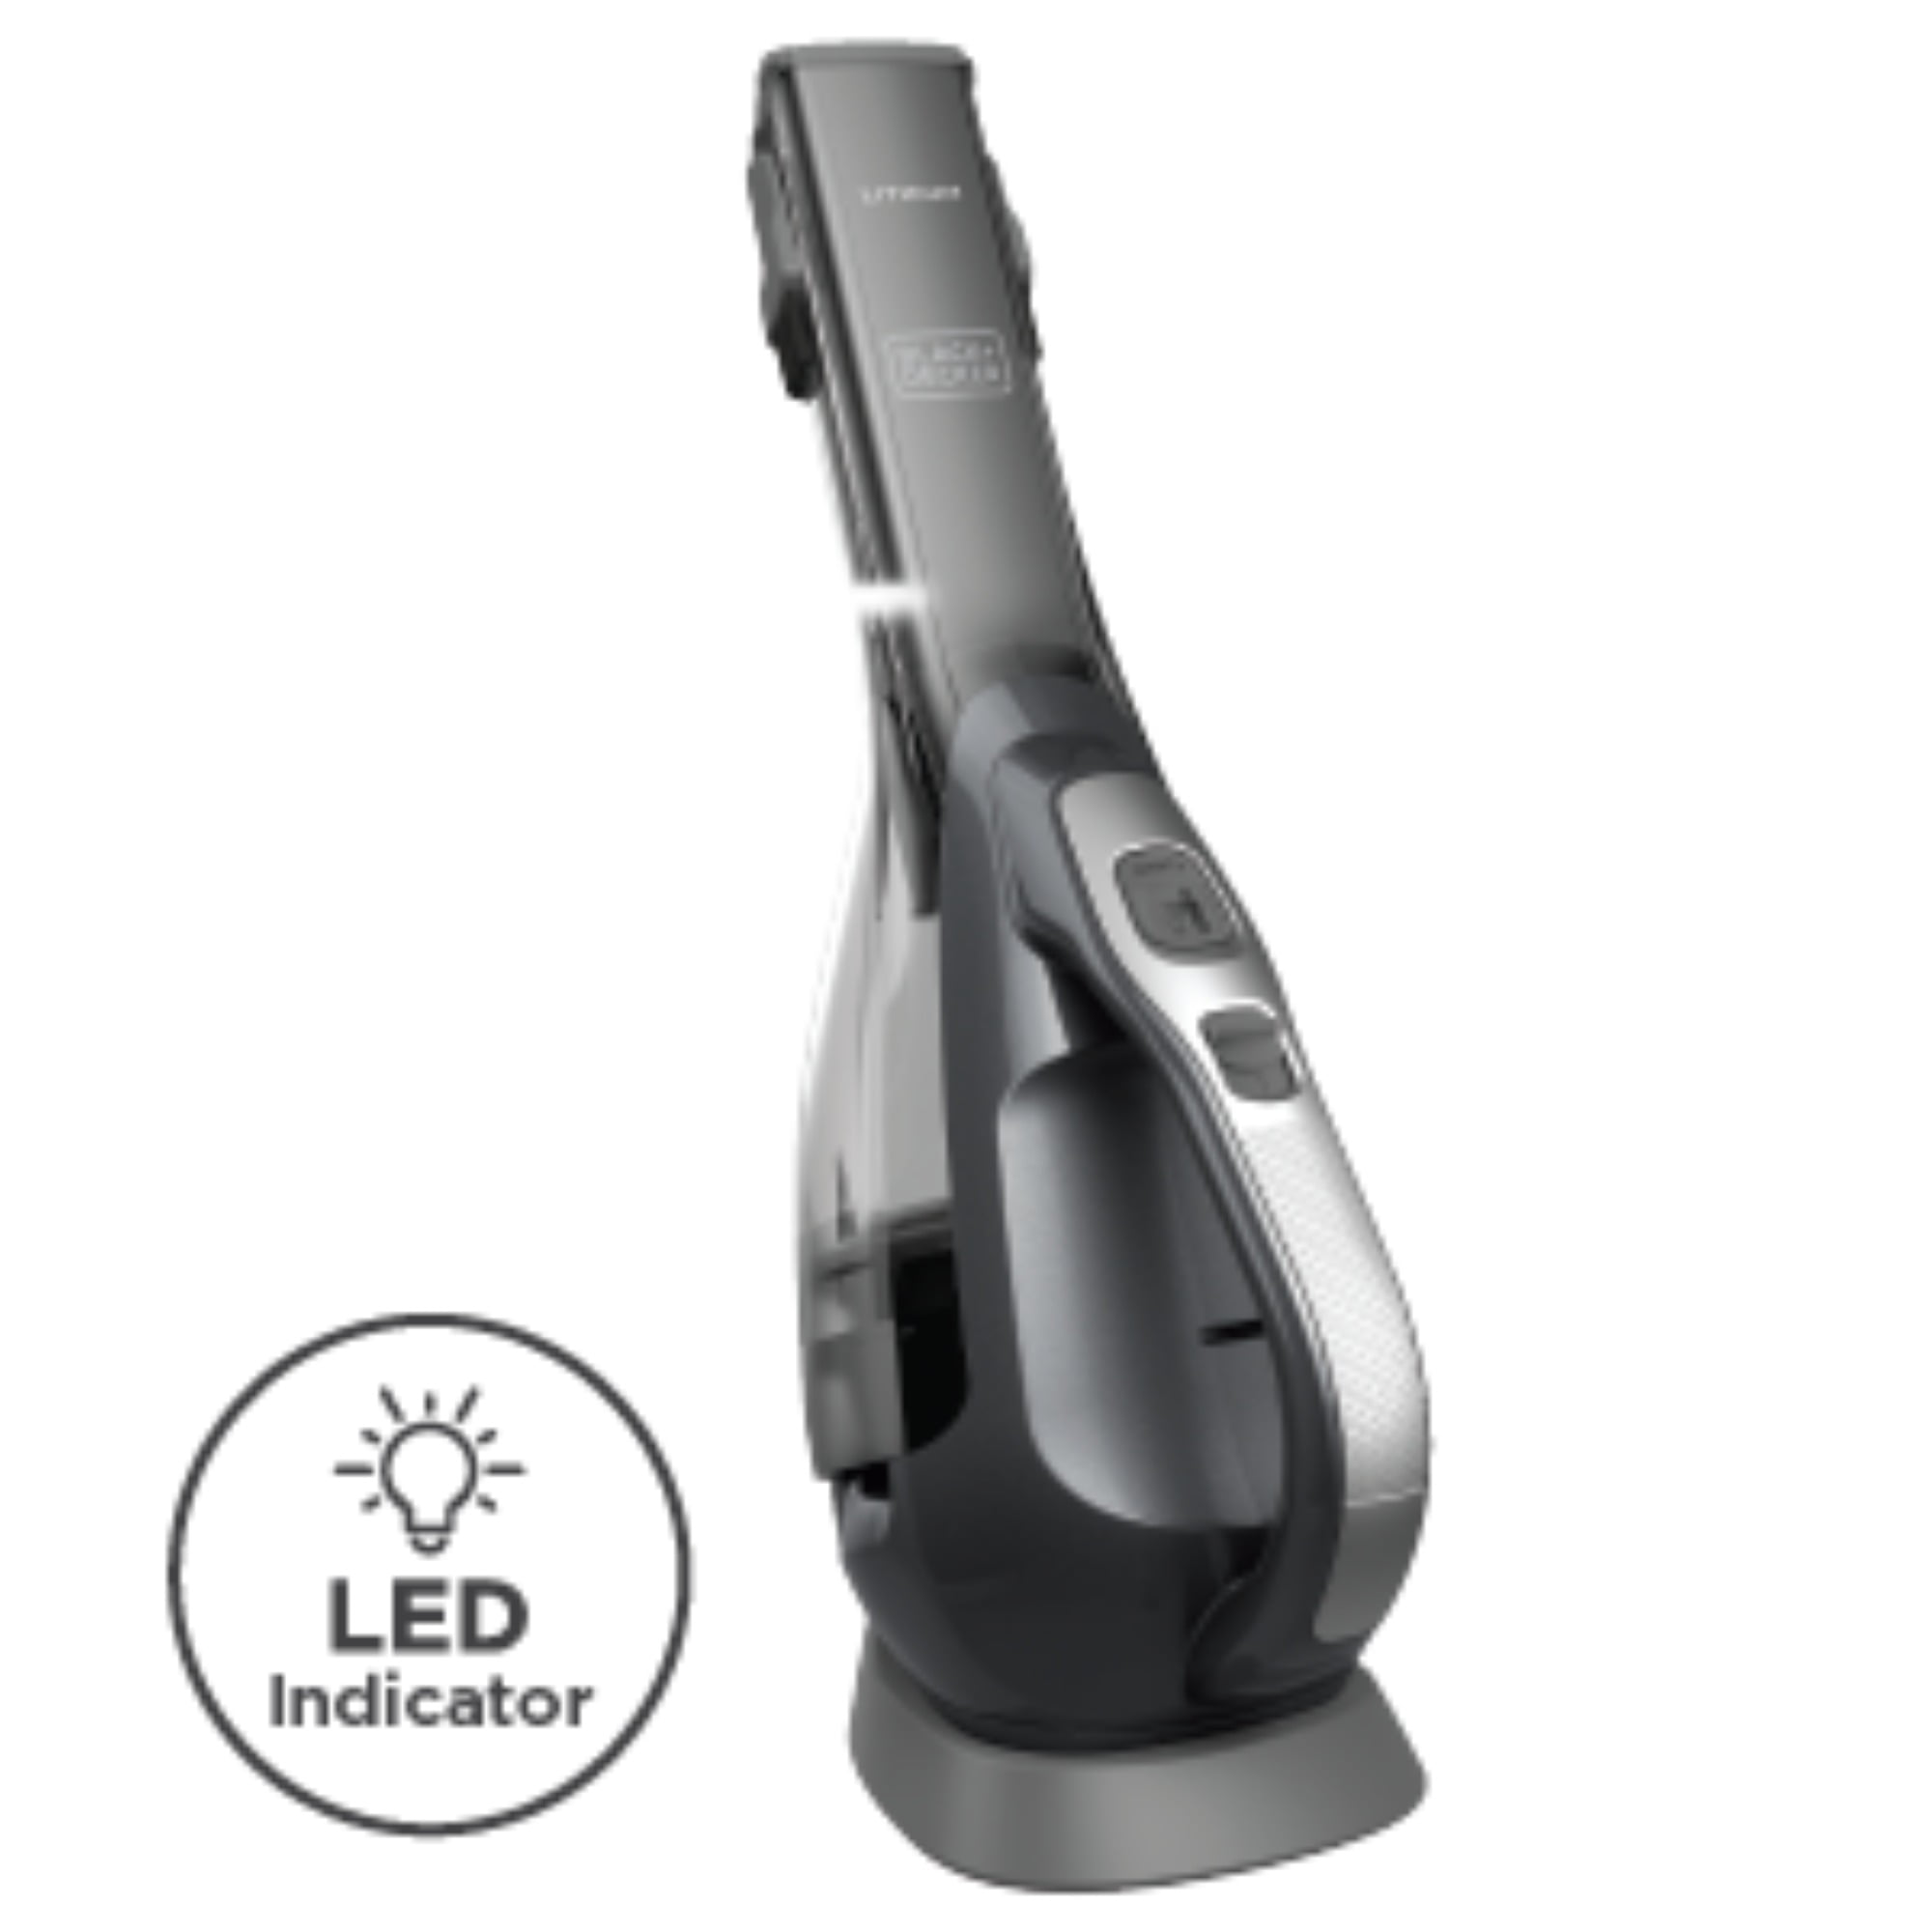 Black+decker Cordless Lithium Hand Vacuum (Powder White), HLVA325J10